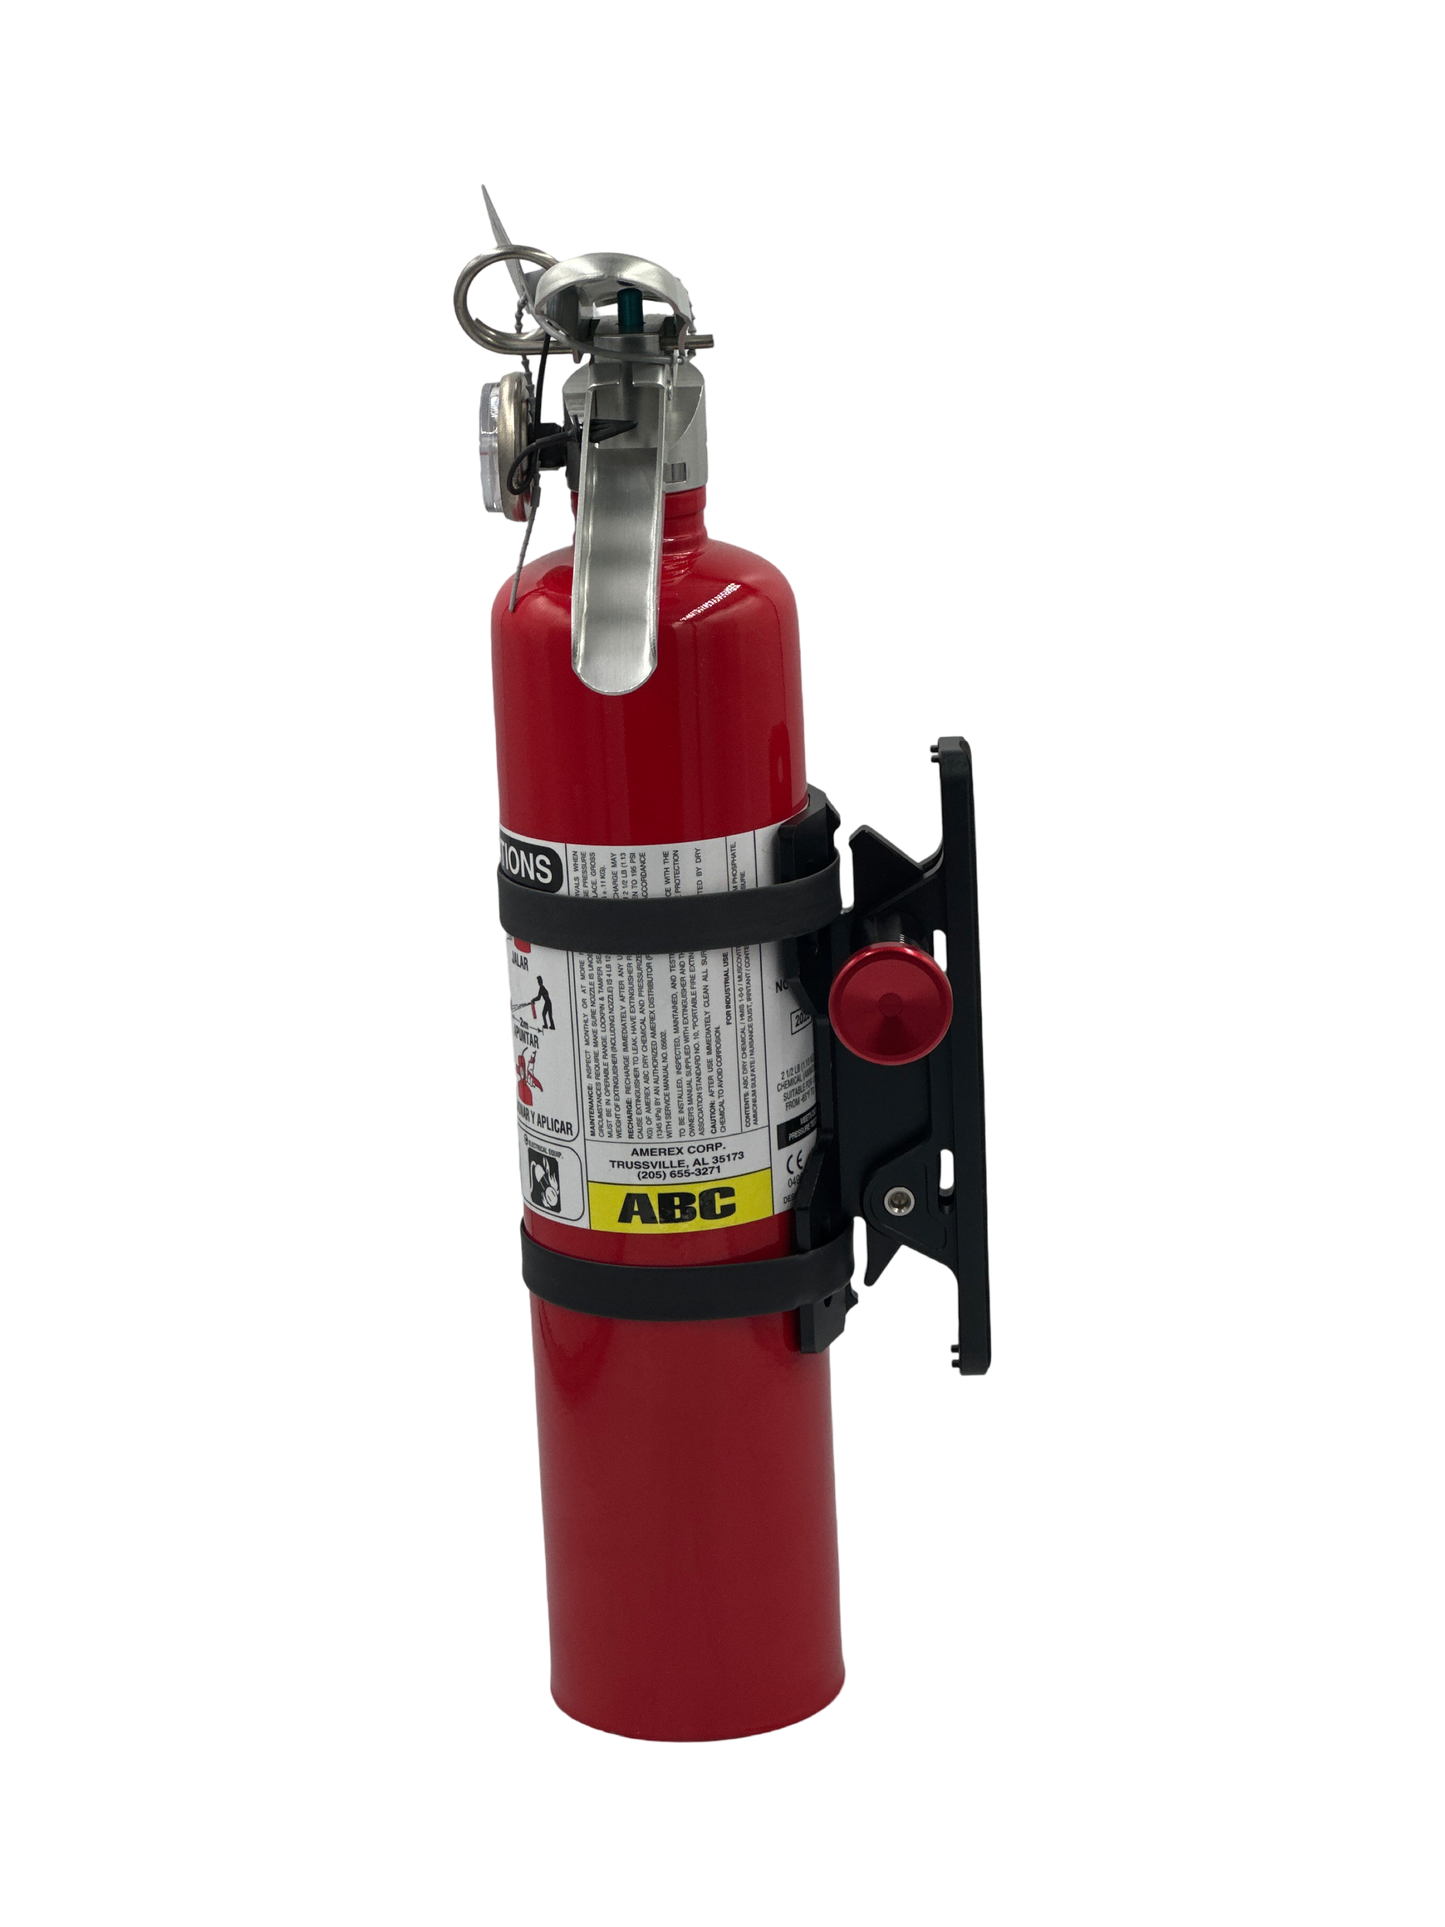 UTV Fire Extinguisher and Mount